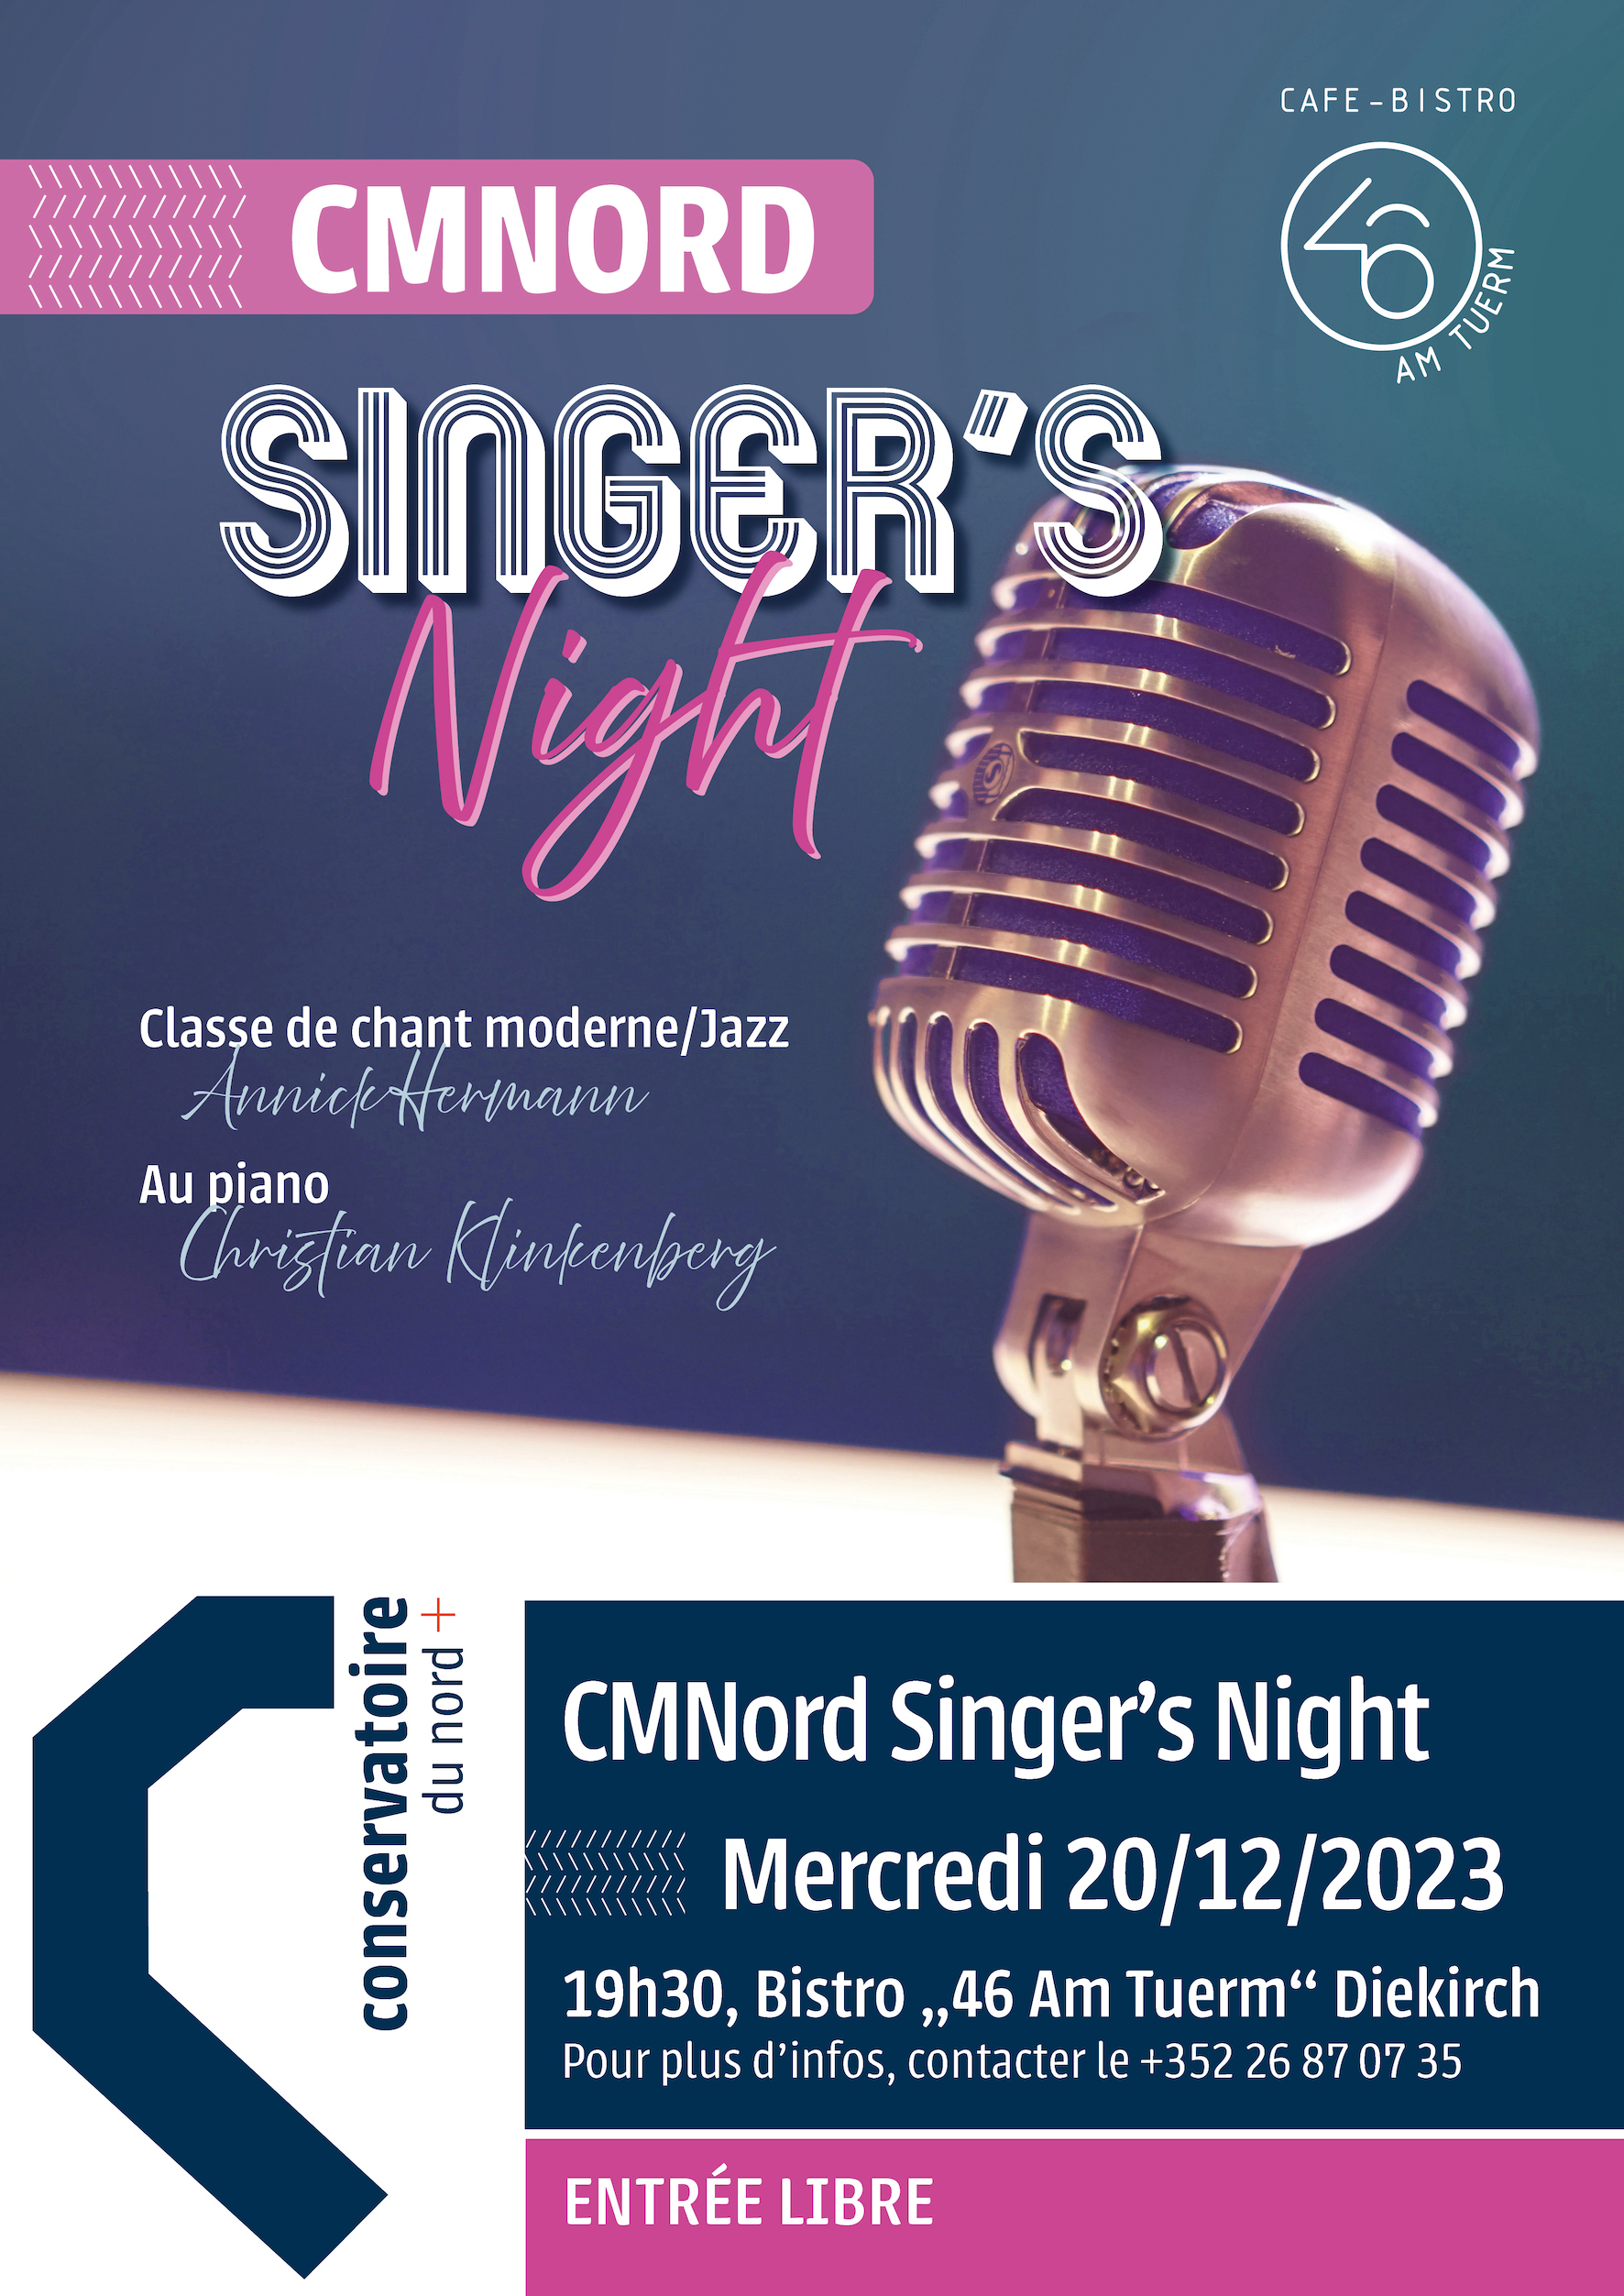 CMNORD Singer’s Night